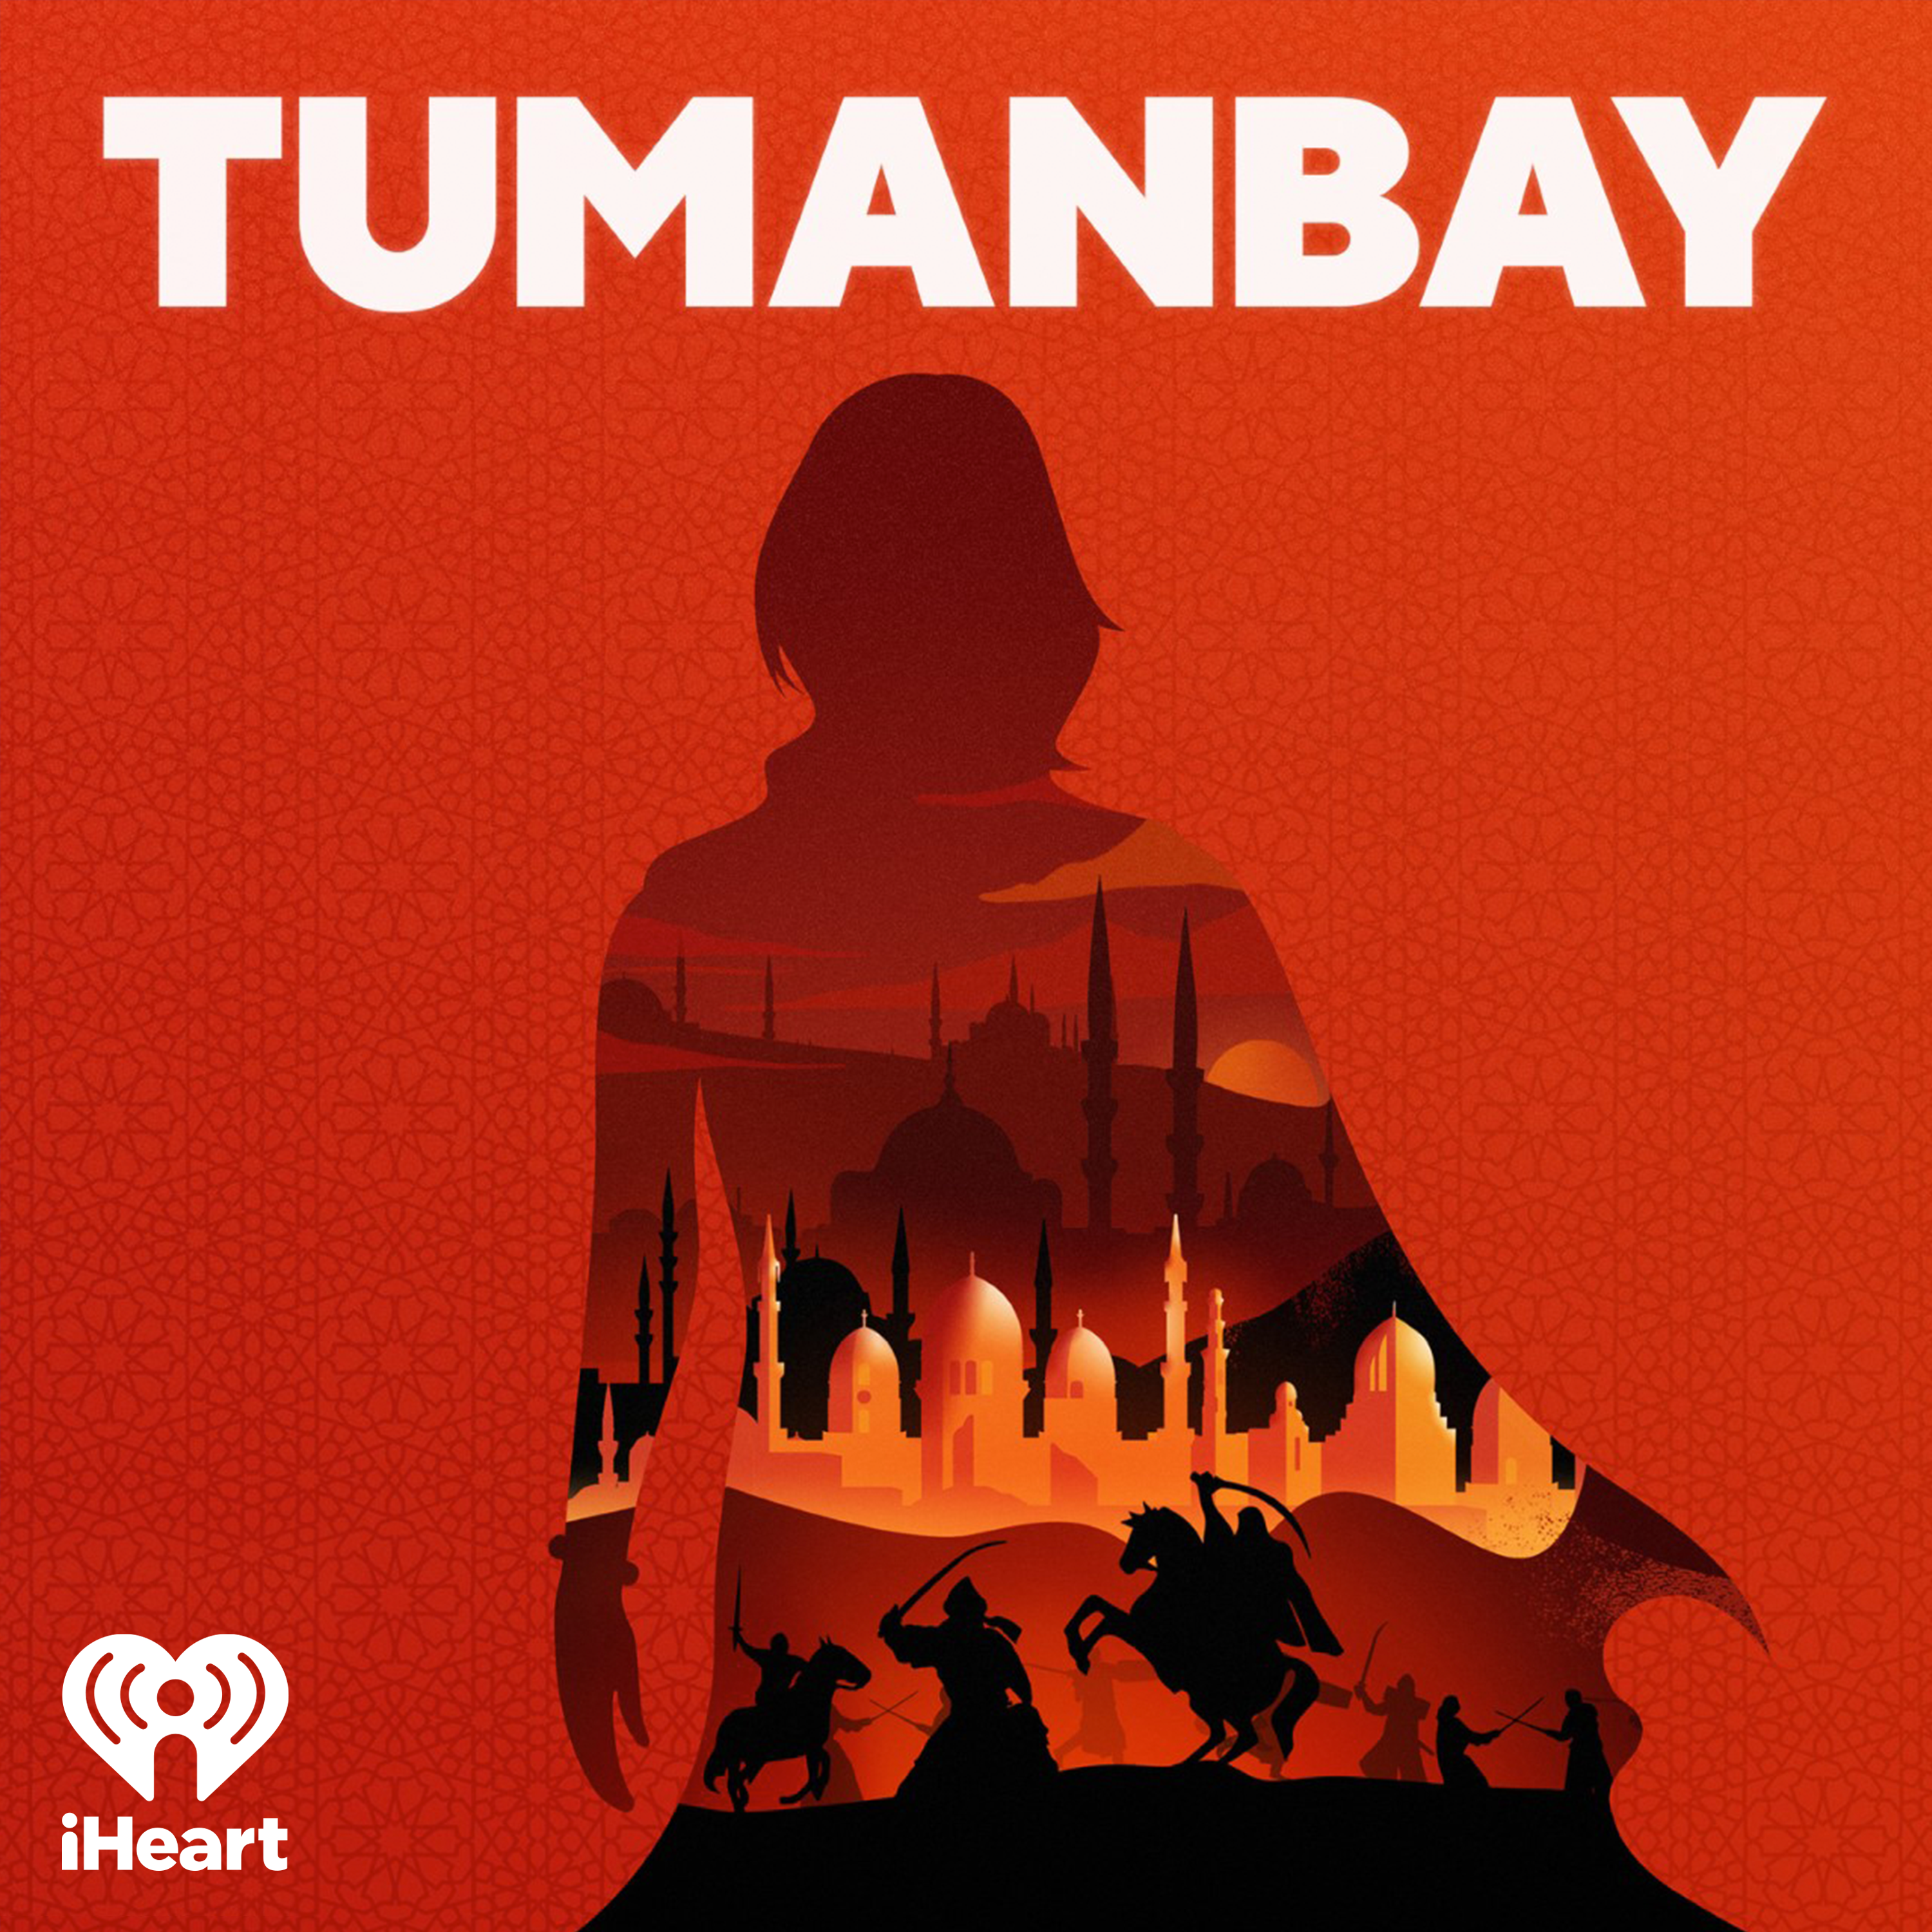 Get Ready for Tumanbay Seasons 1 & 2